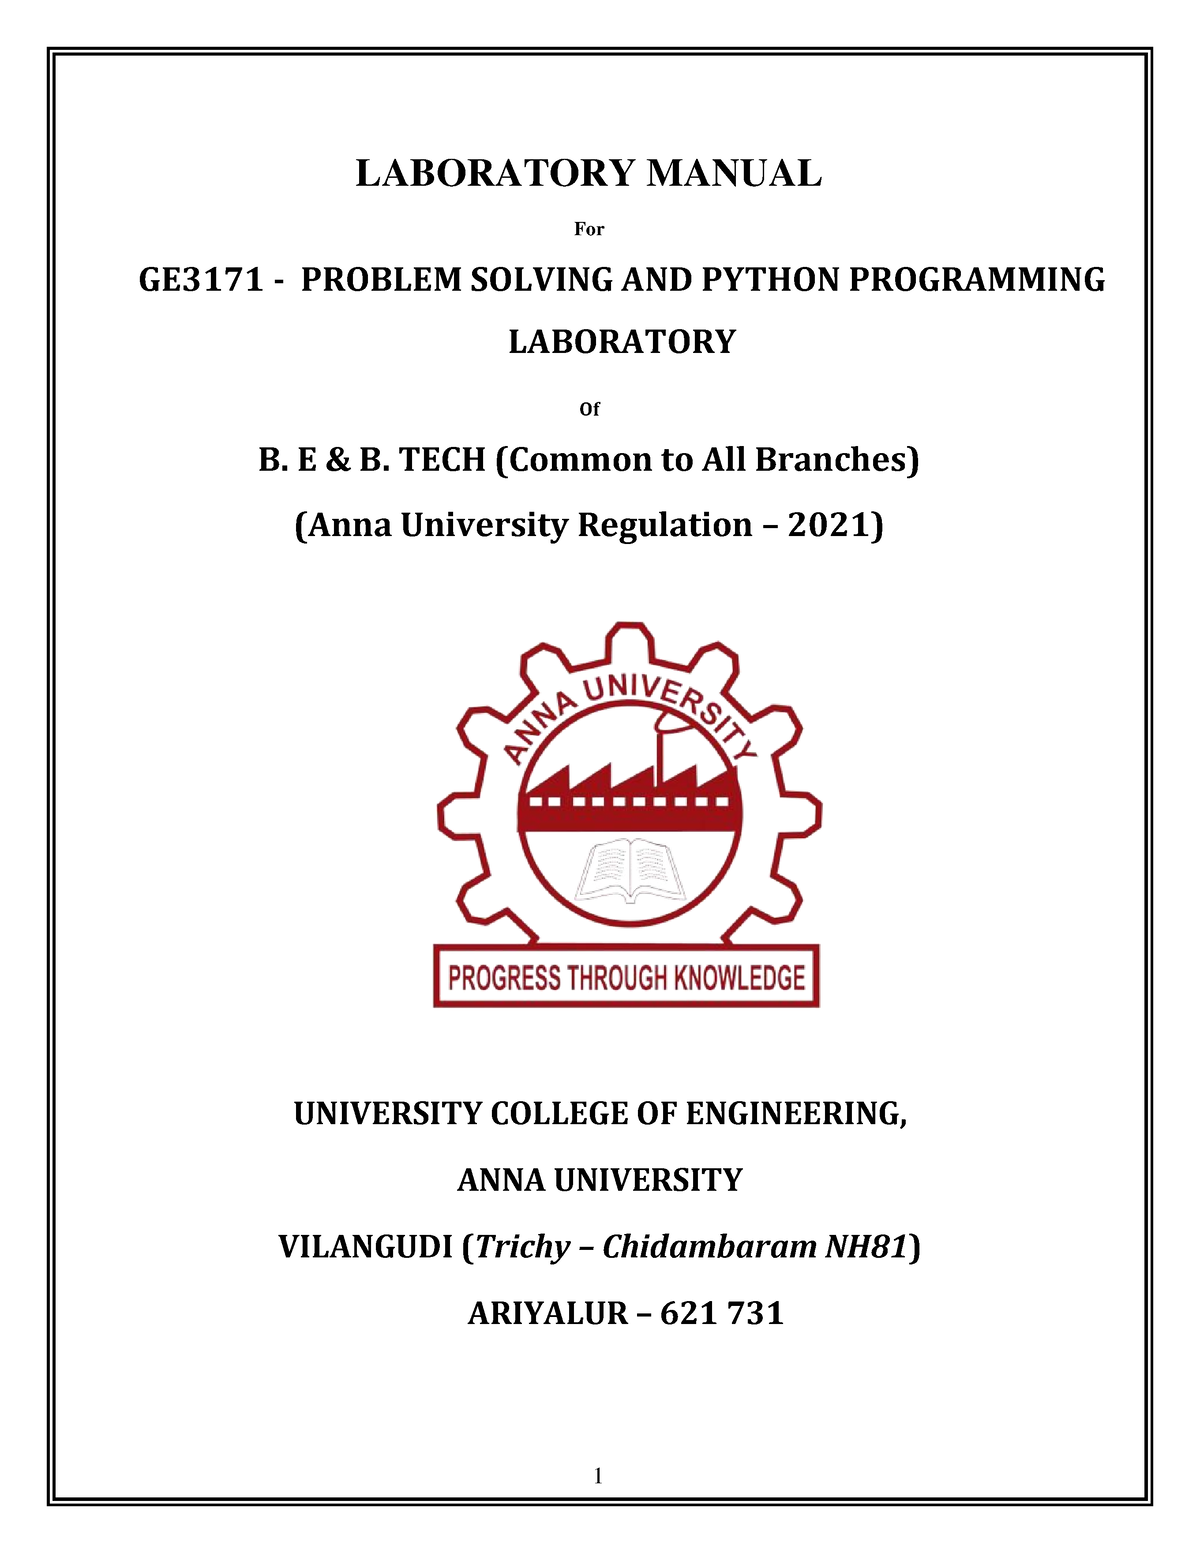 ge3171 problem solving and python programming laboratory lab manual